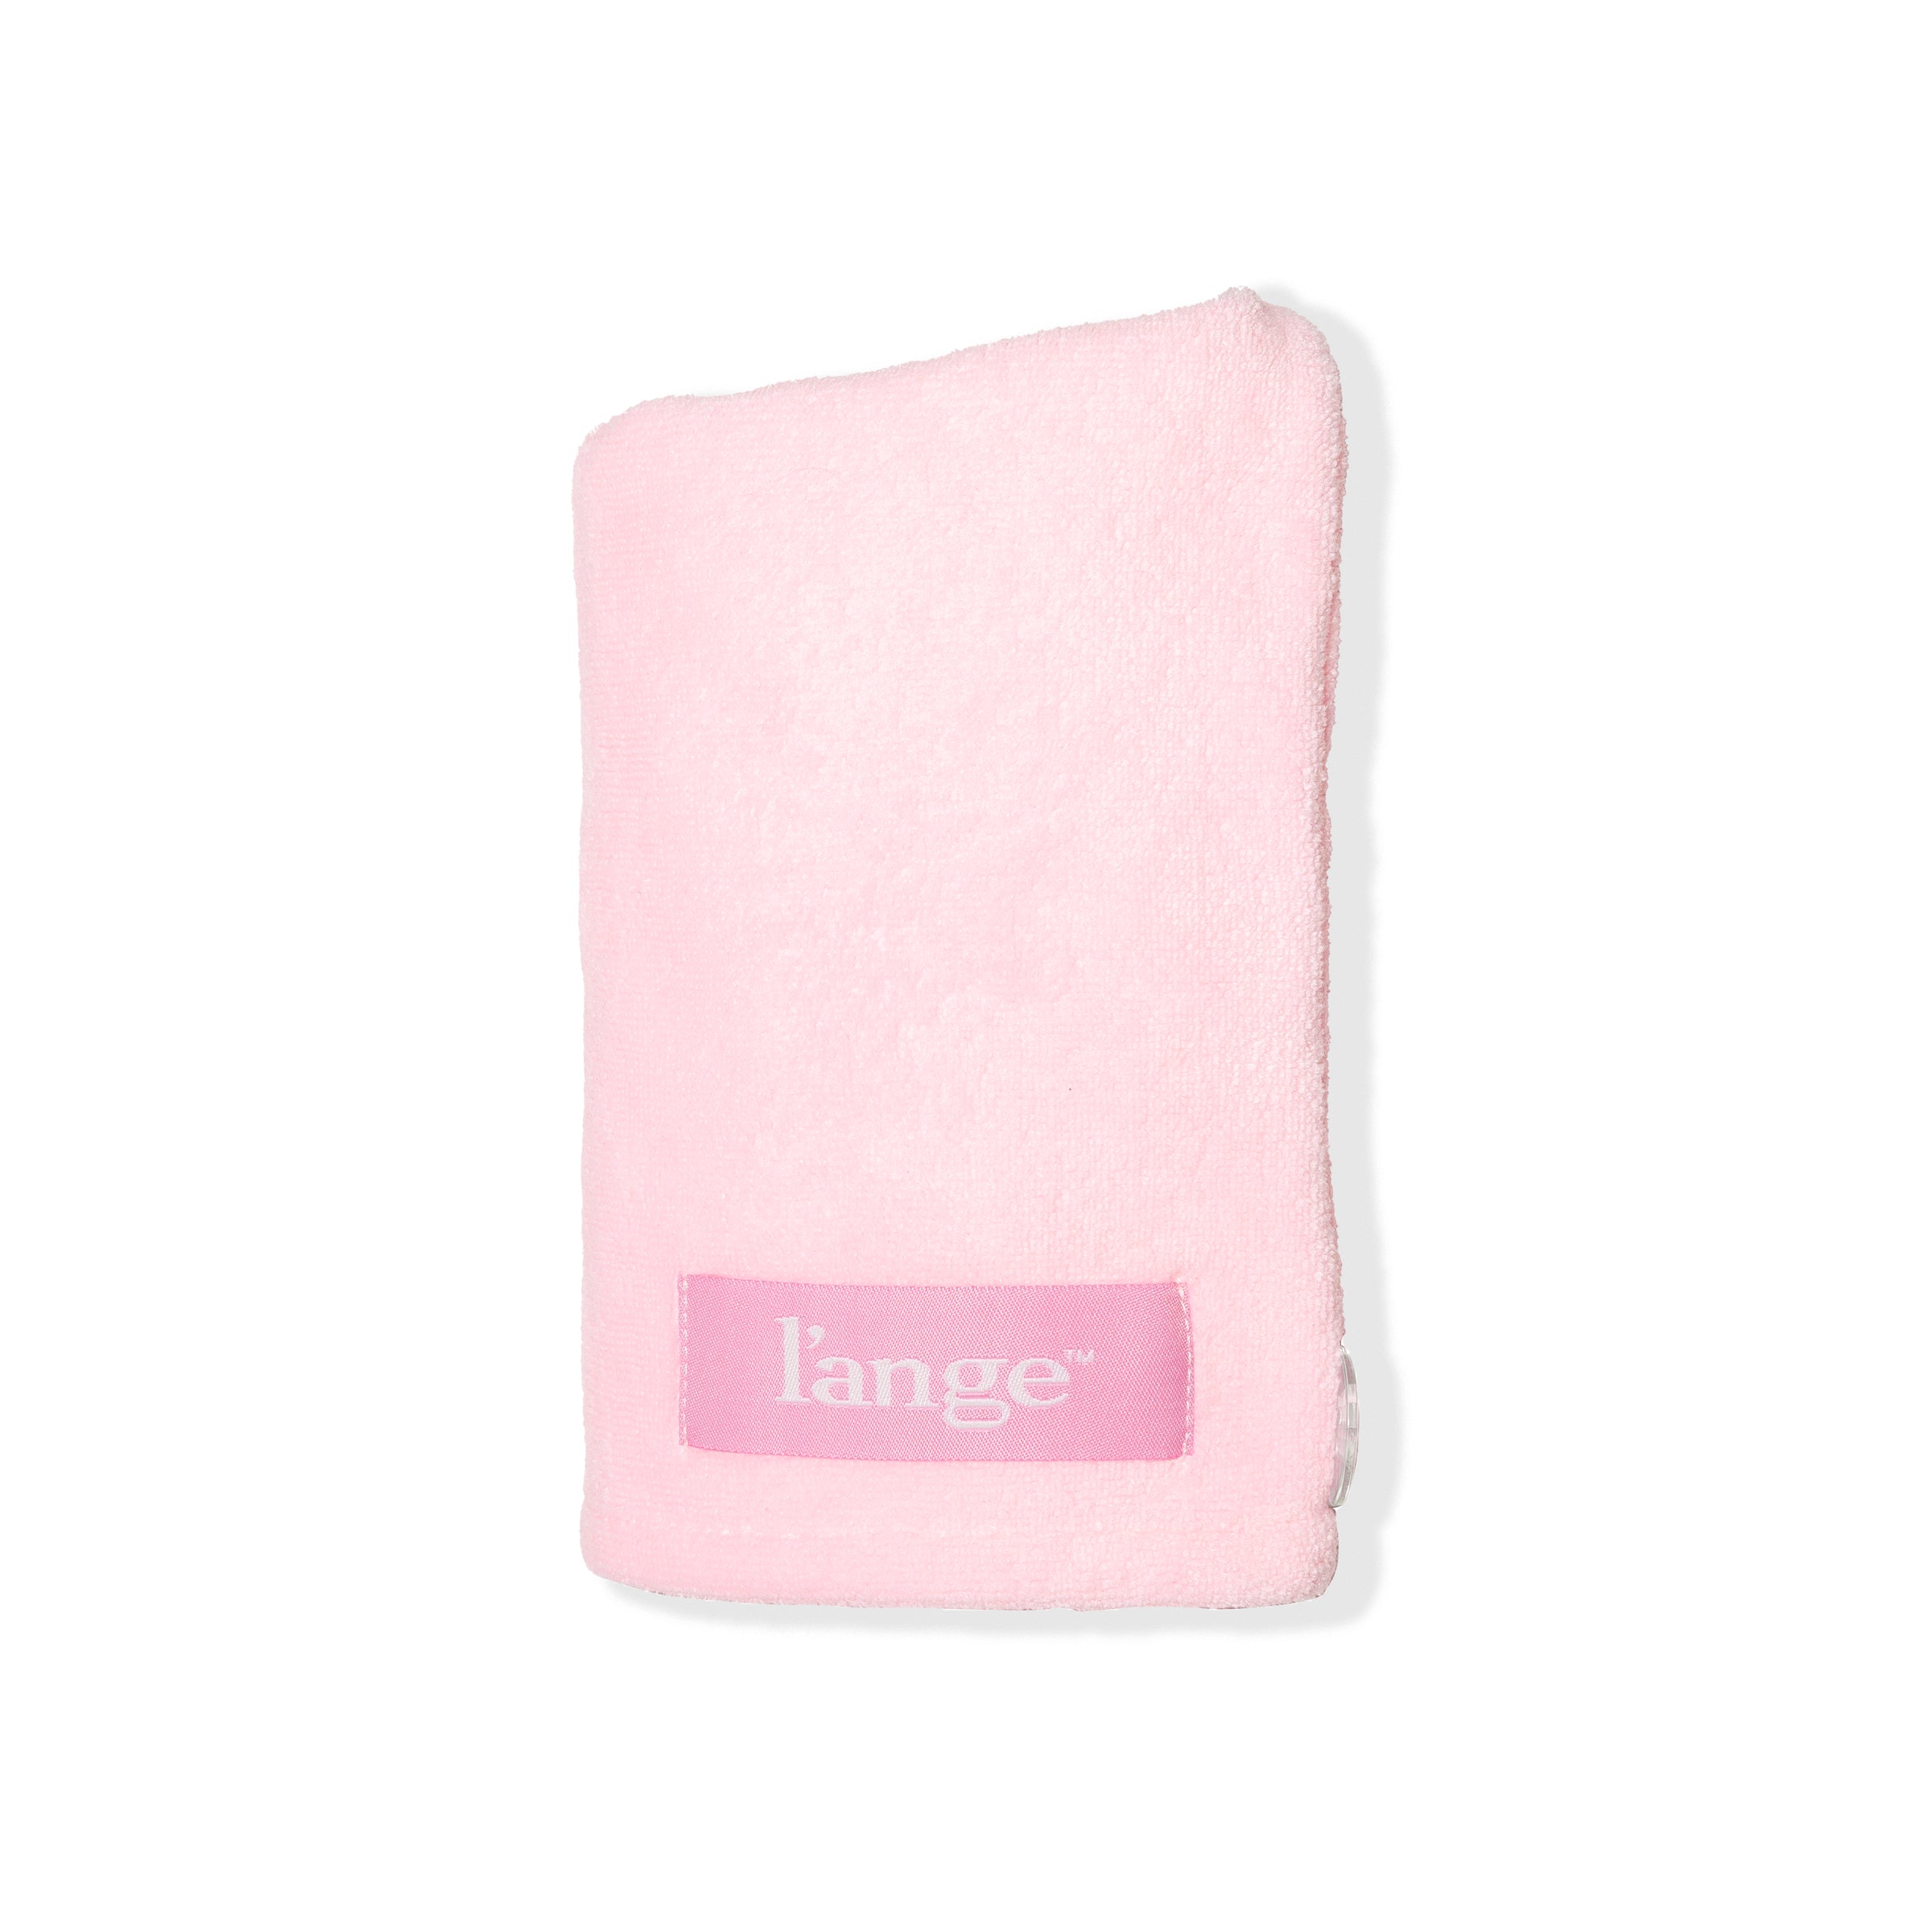 New conair absorbent microfiber hair towel pink 